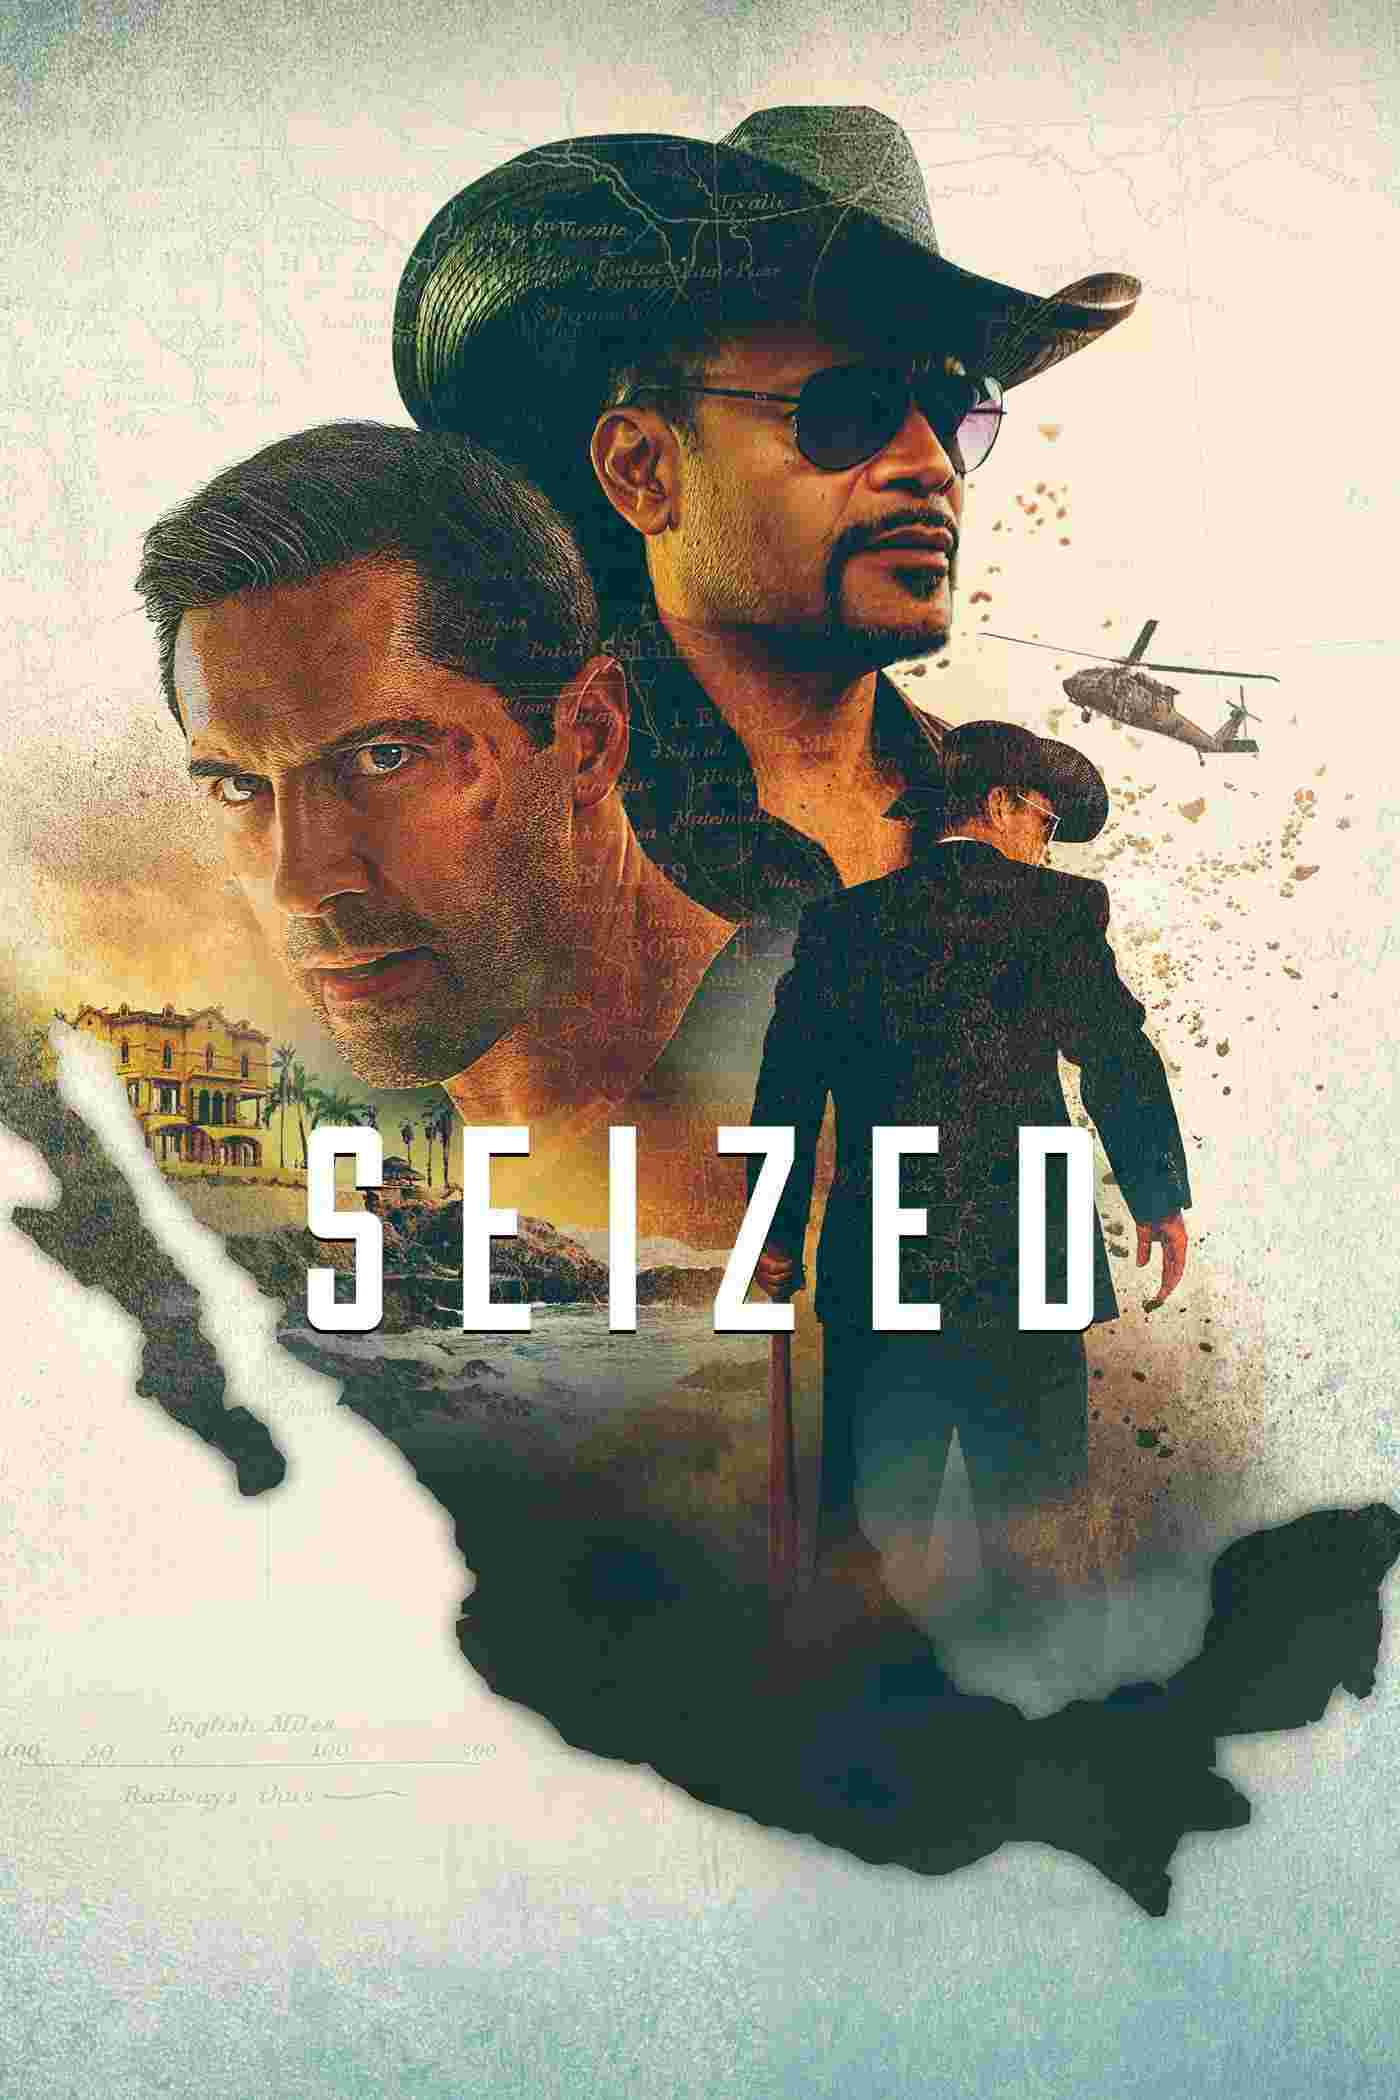 Seized (2020) Scott Adkins